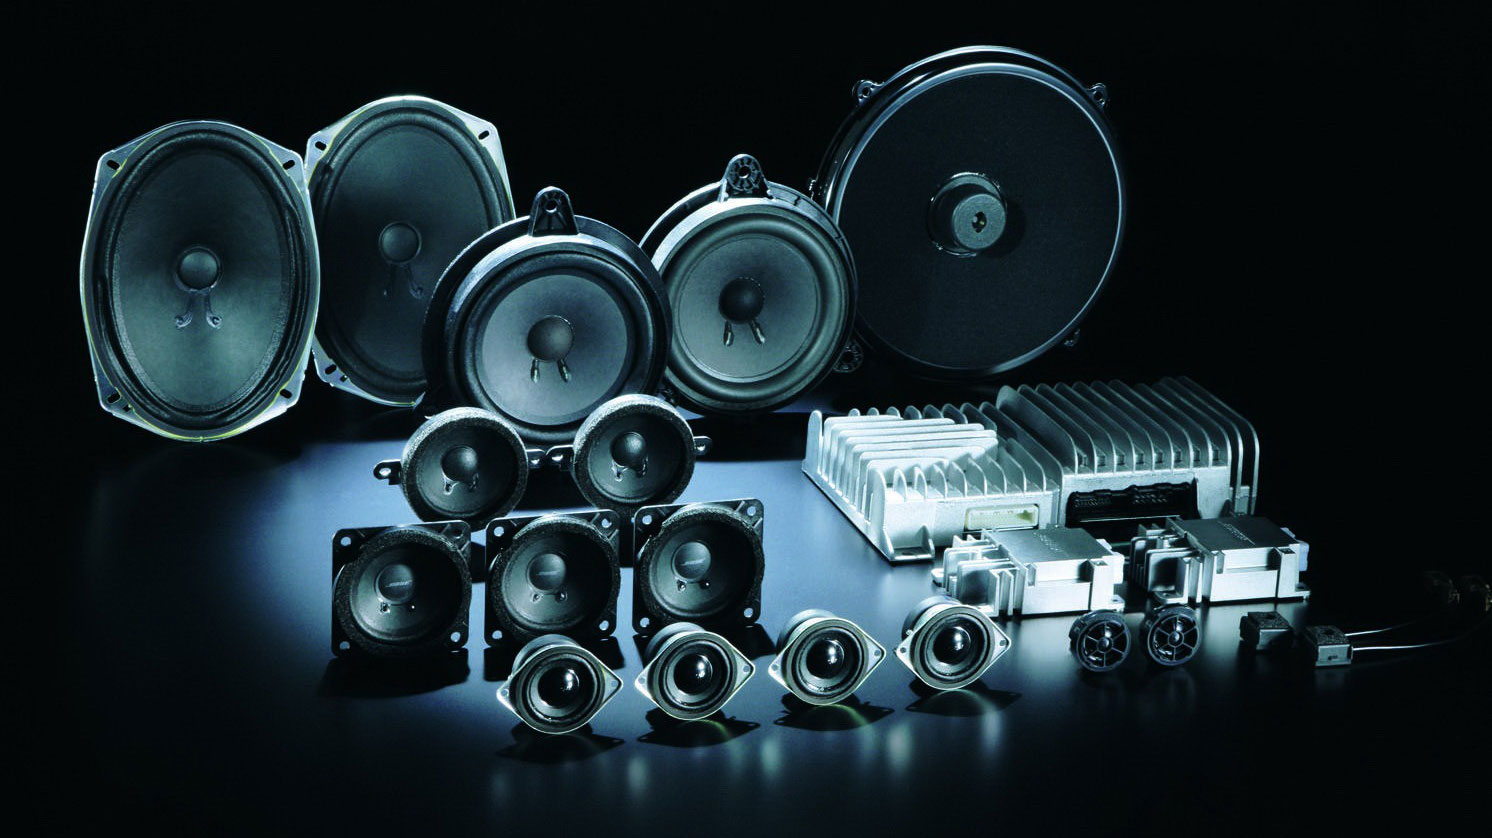 Bose звук. Mitsubishi Power Sound System. Nissan Bose Sound System. Bose авто Япония. Infinity Bose Sound System.